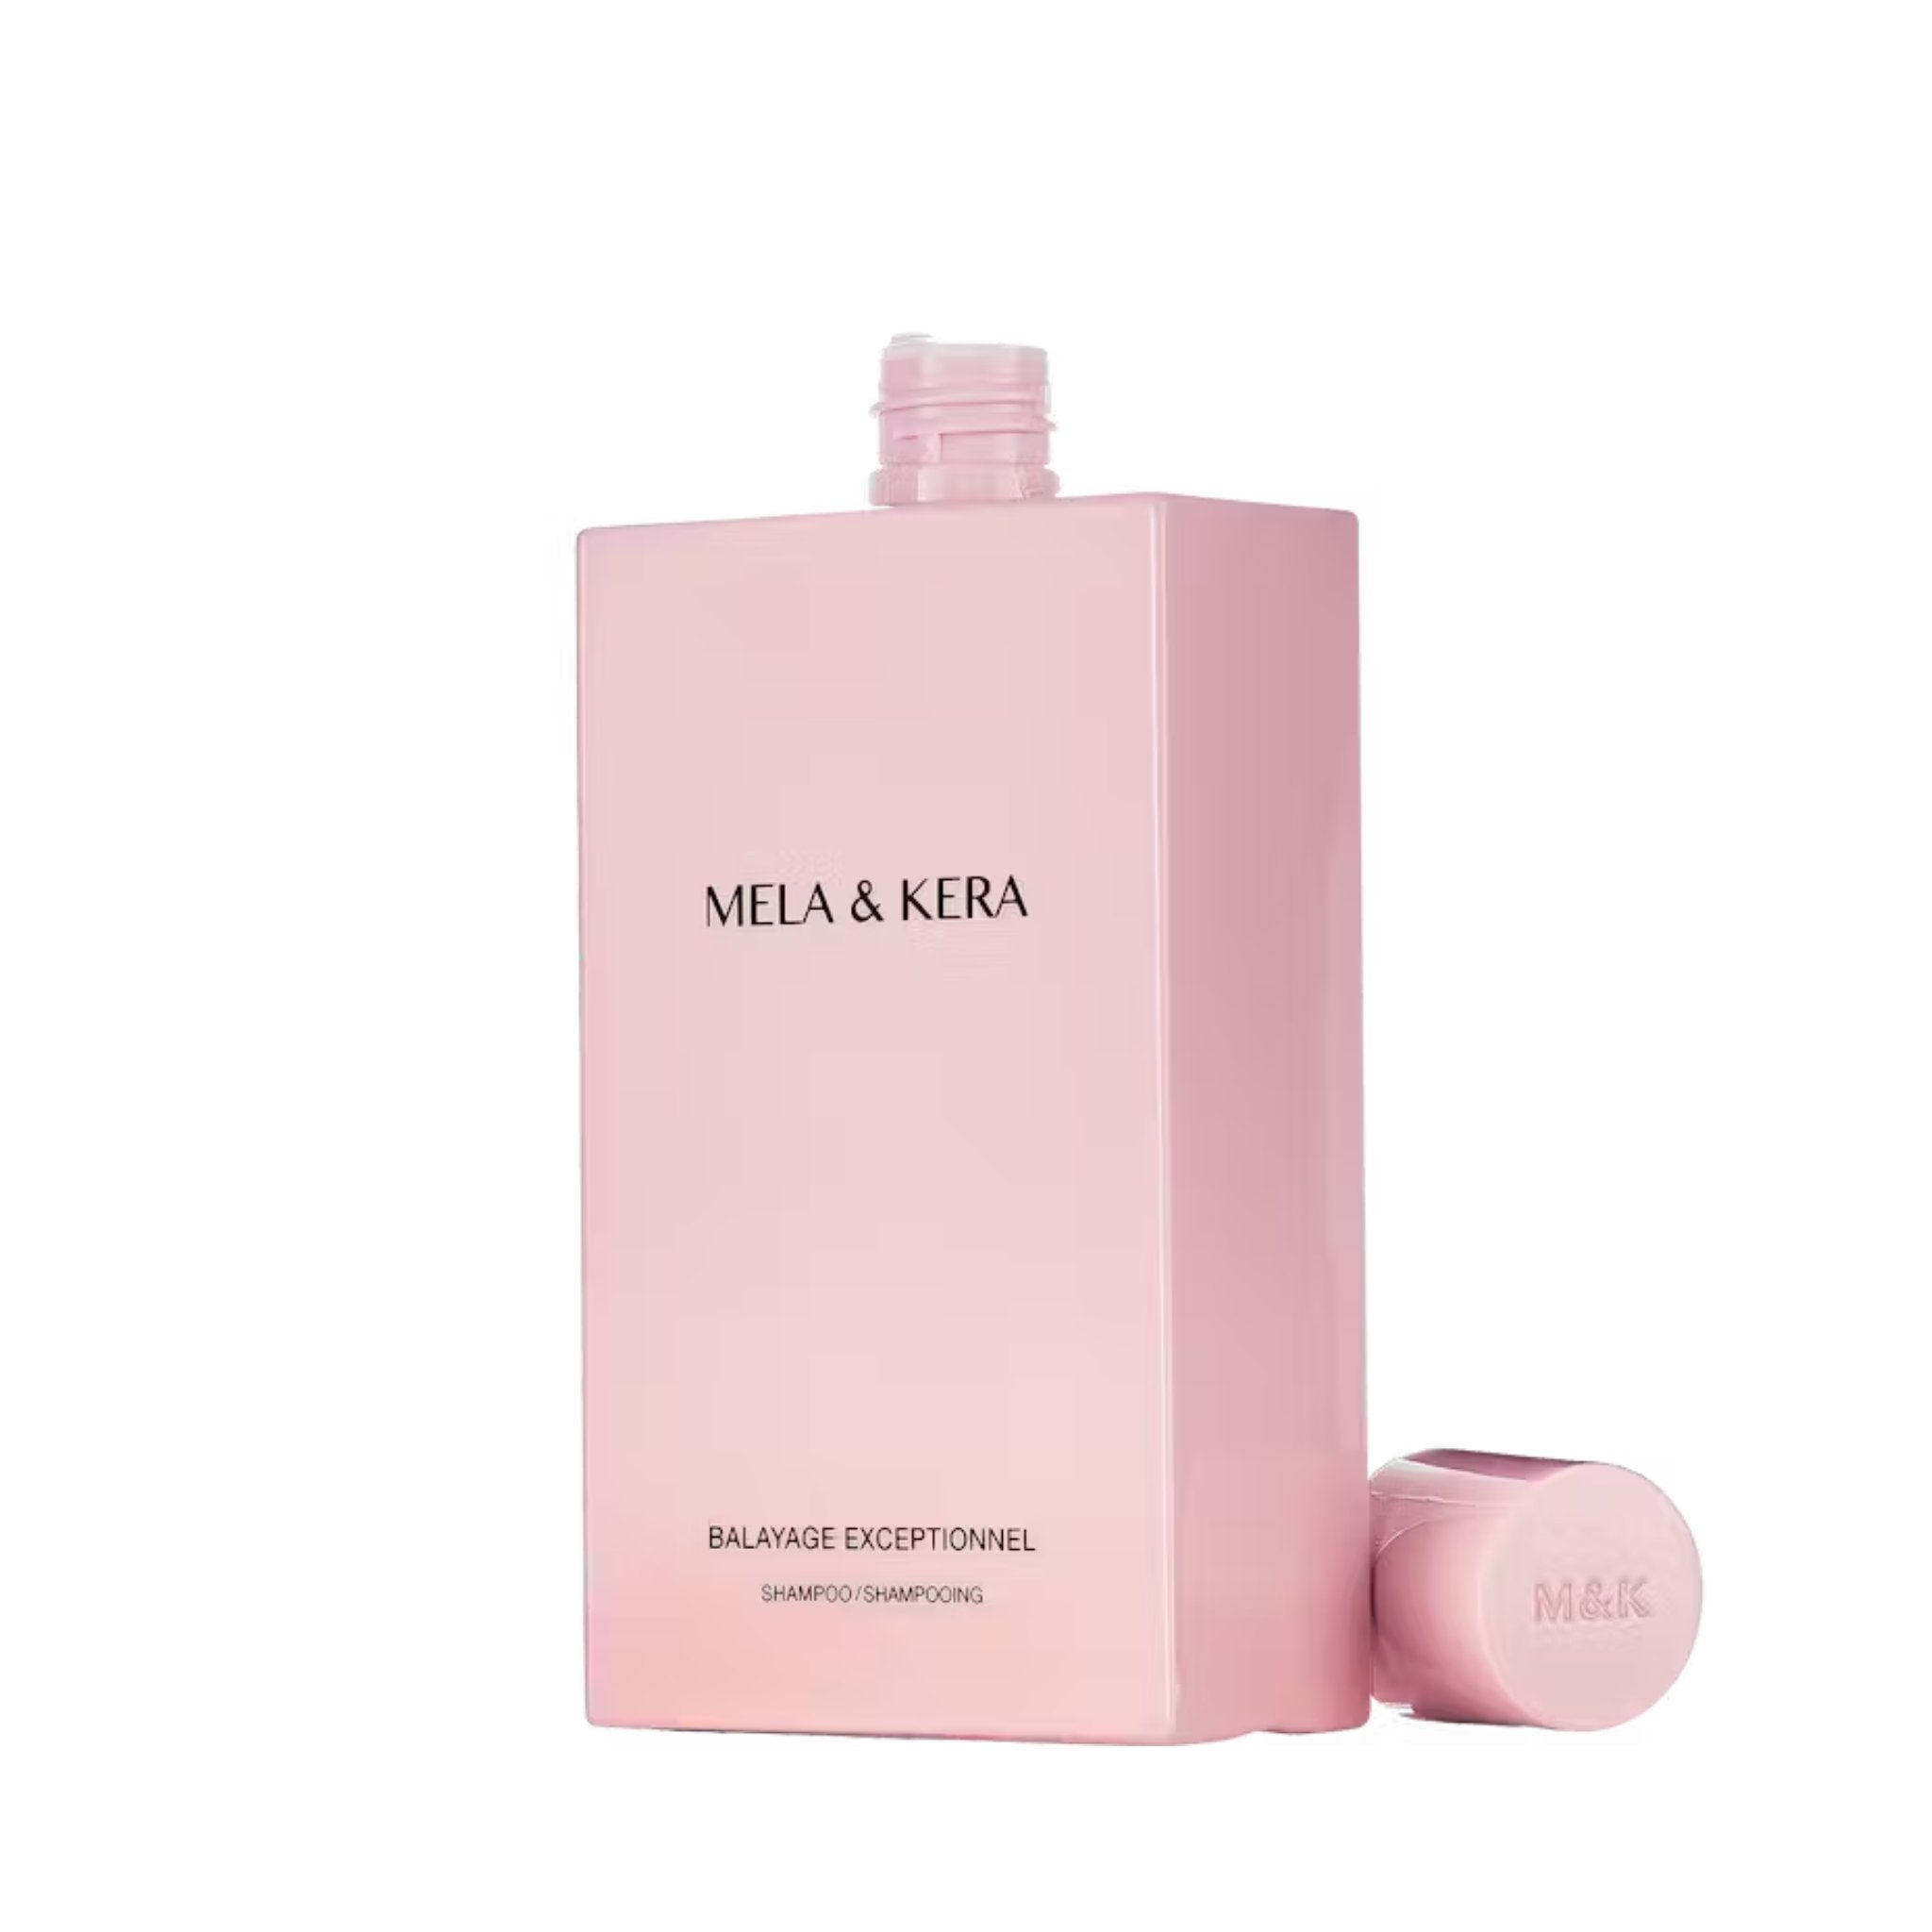 Mela & Kera. Balayage Exceptionnel Shampoing - 250 ml - Concept C. Shop